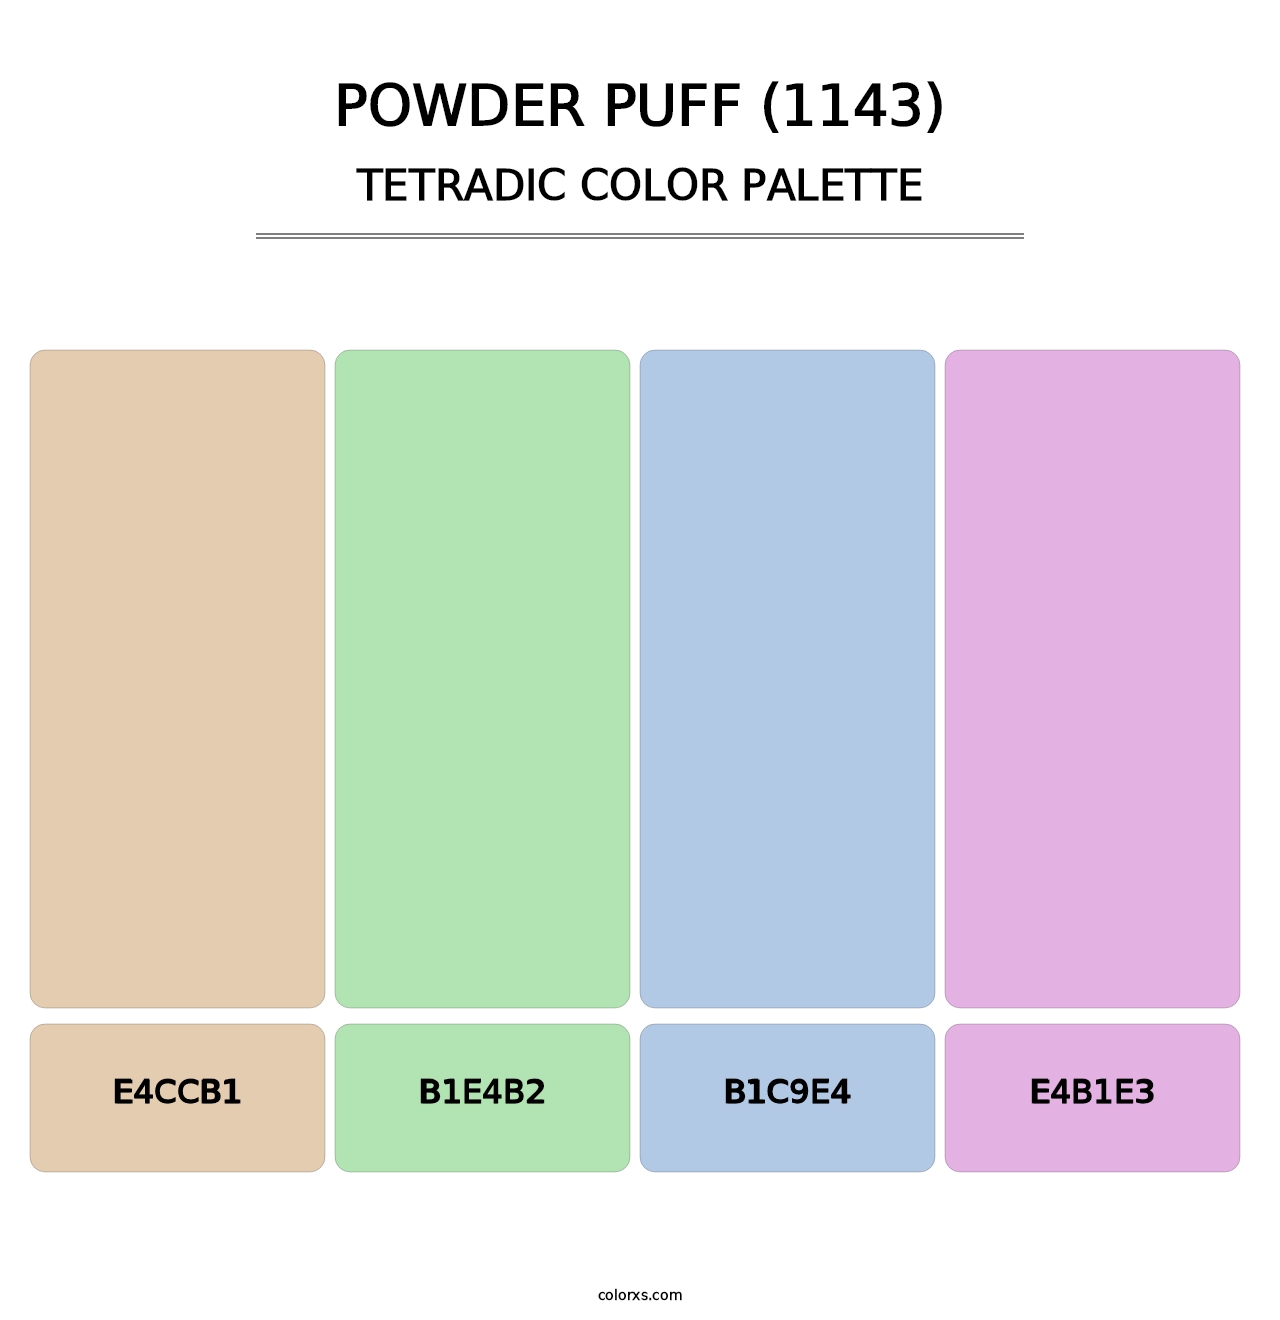 Powder Puff (1143) - Tetradic Color Palette